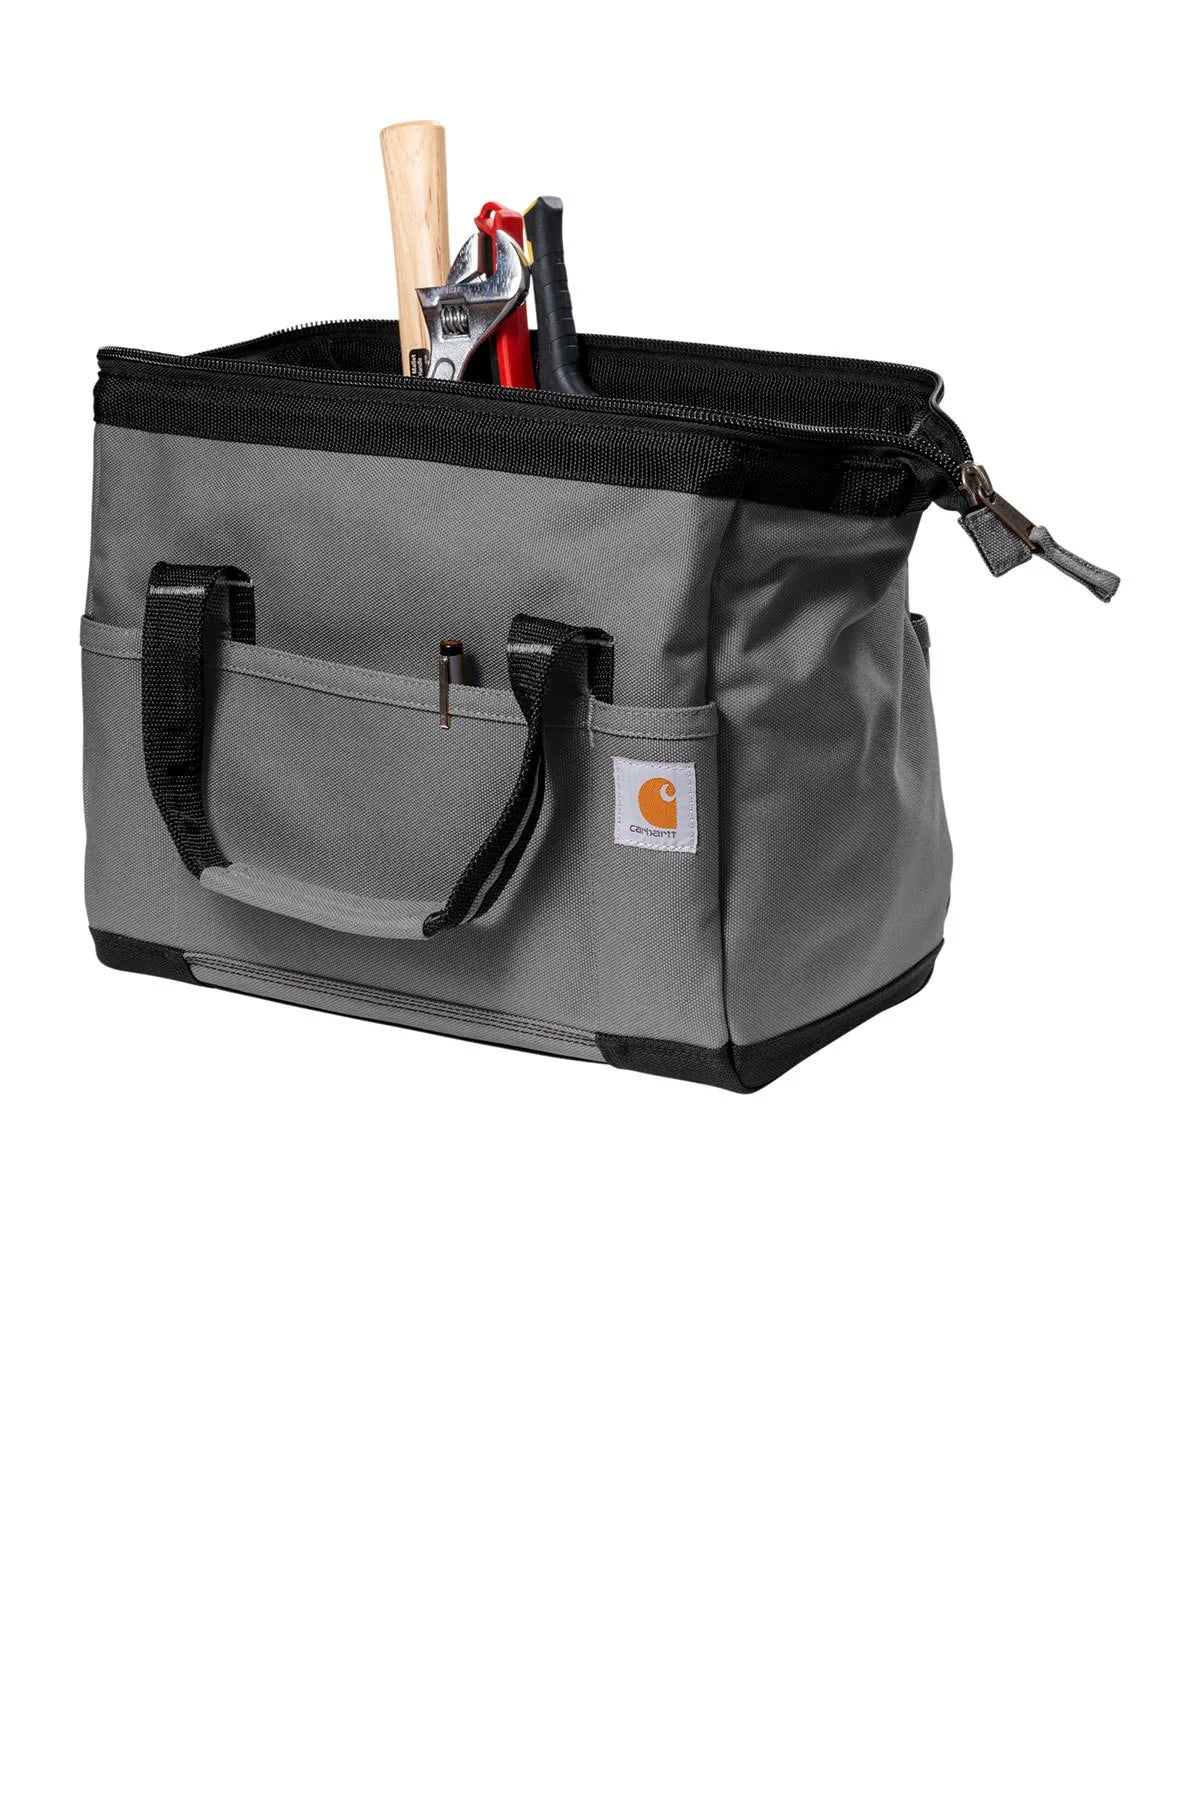 Custom Carhartt Foundry Series 14 Tool Bag, Grey